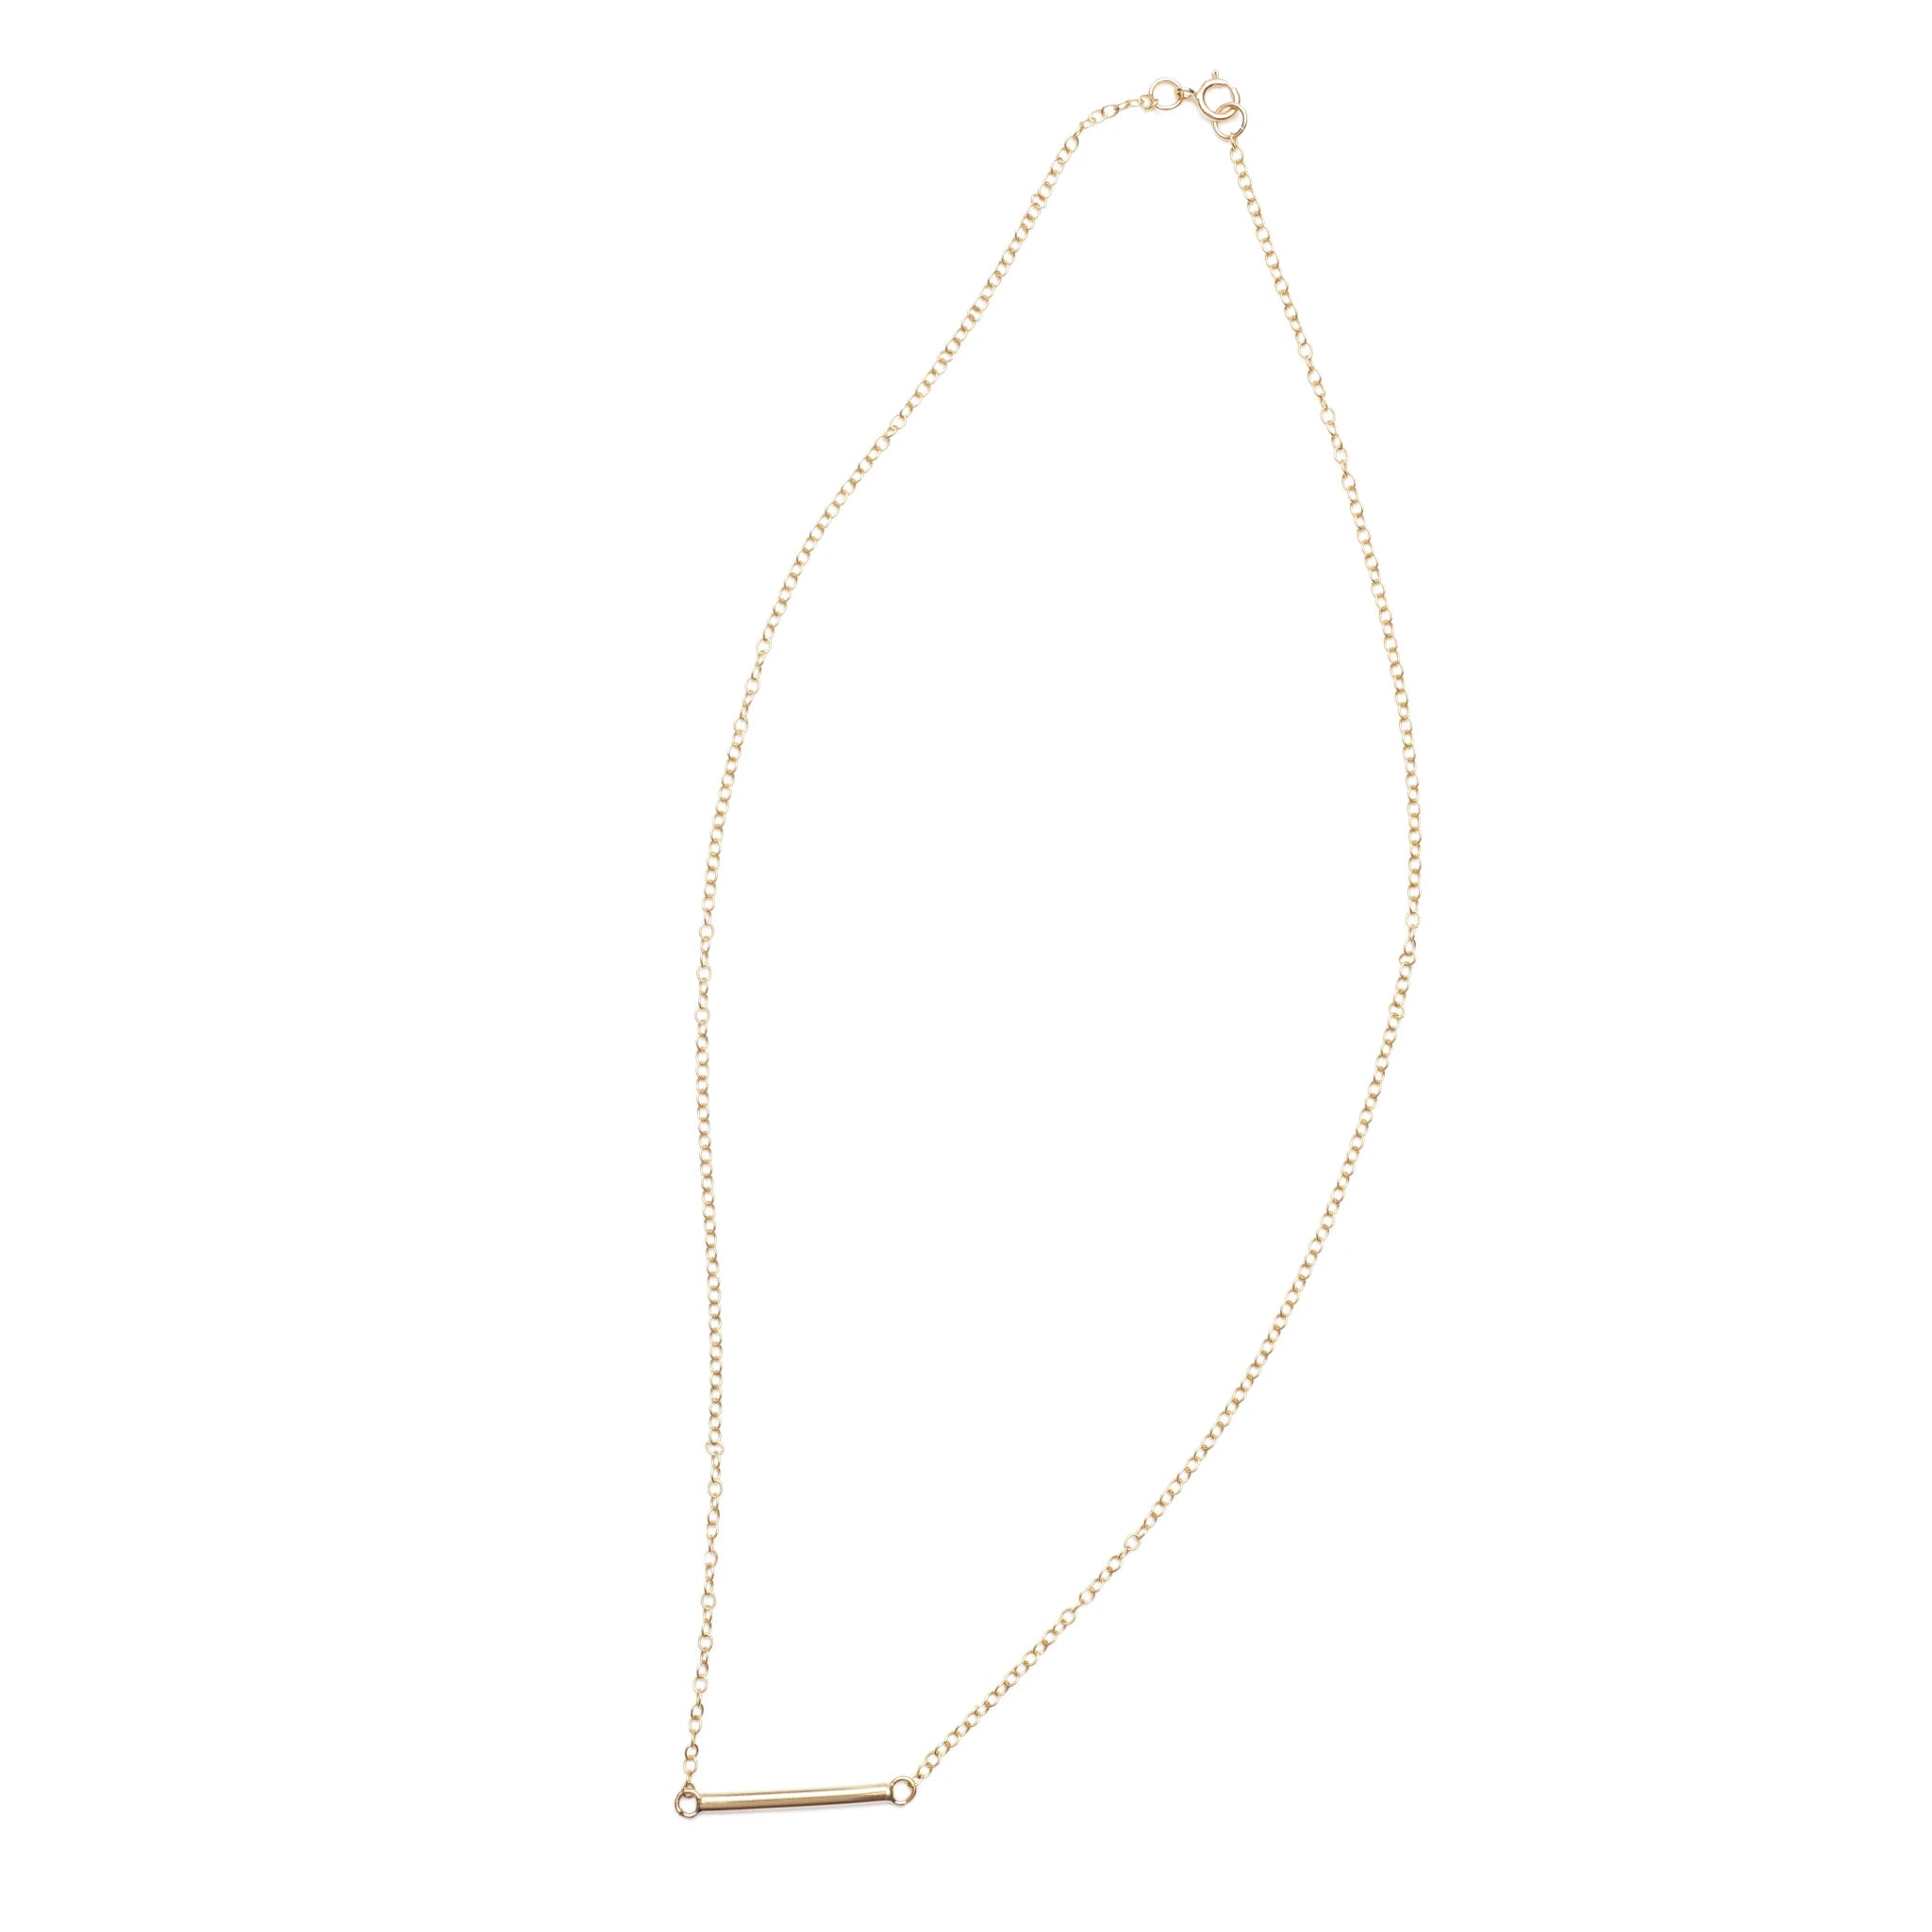 Barre 9kt gold necklace - Skomer Studio - Modern Fine Jewellery